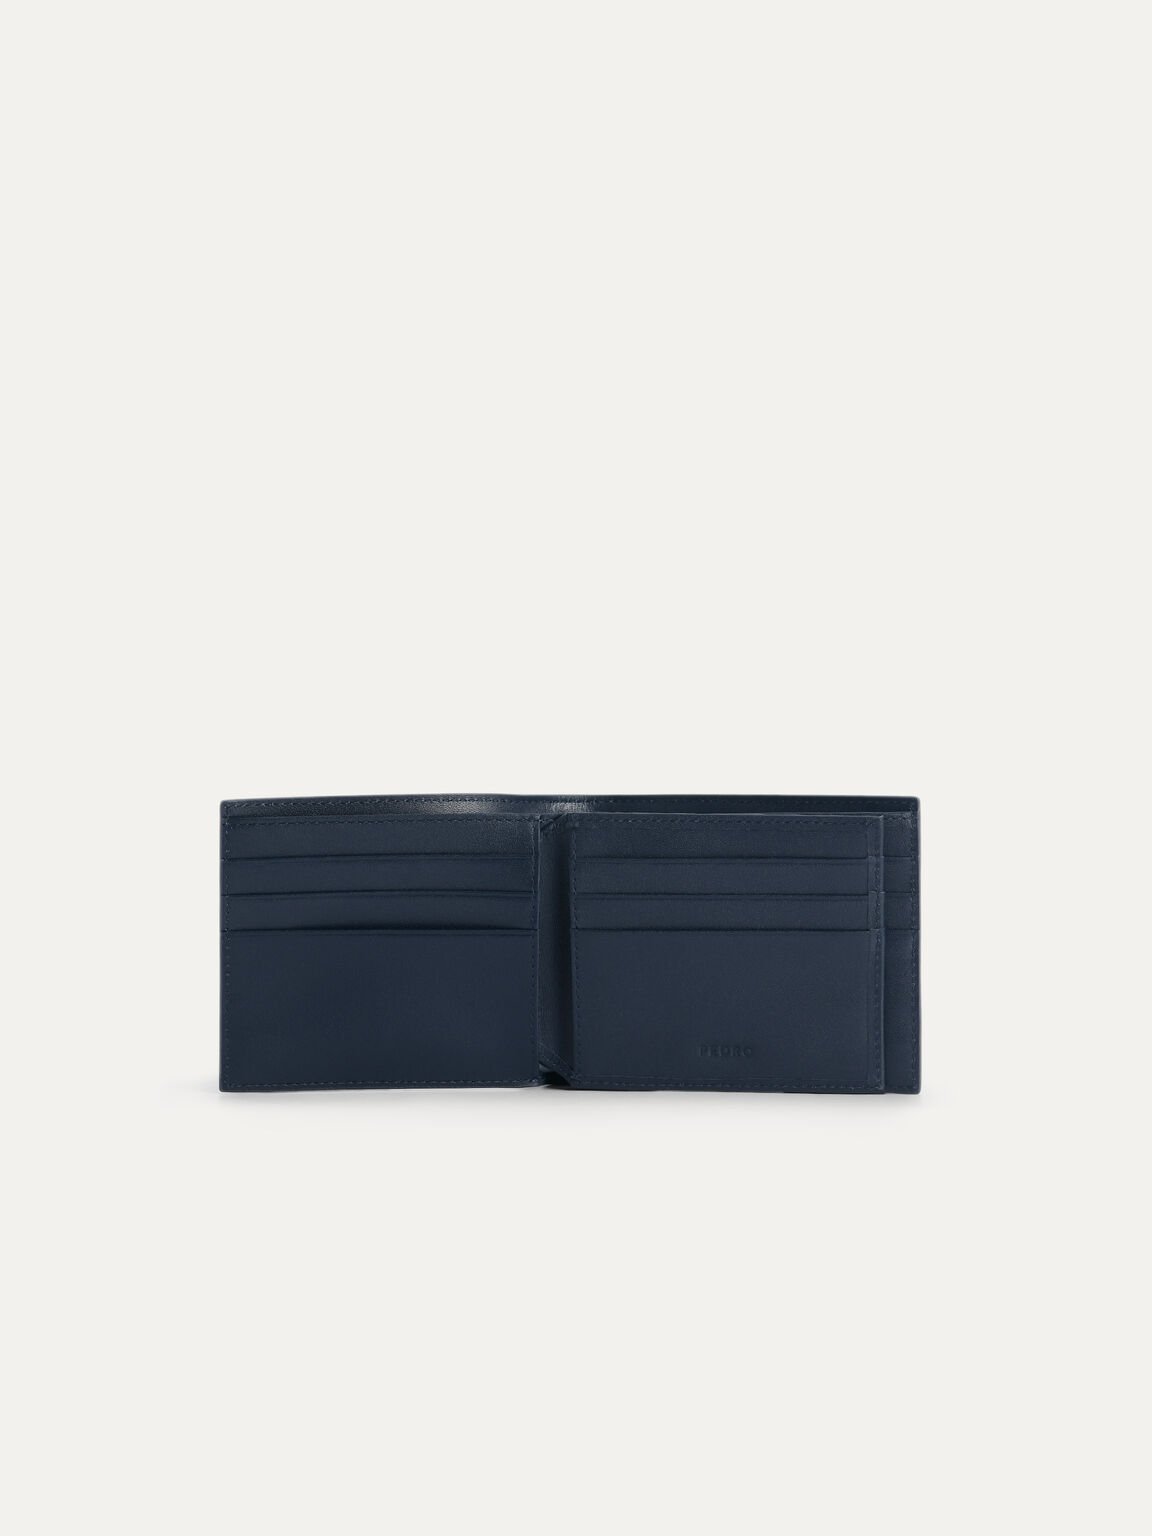 Leather Bi-Fold Wallet with Flip, Navy, hi-res